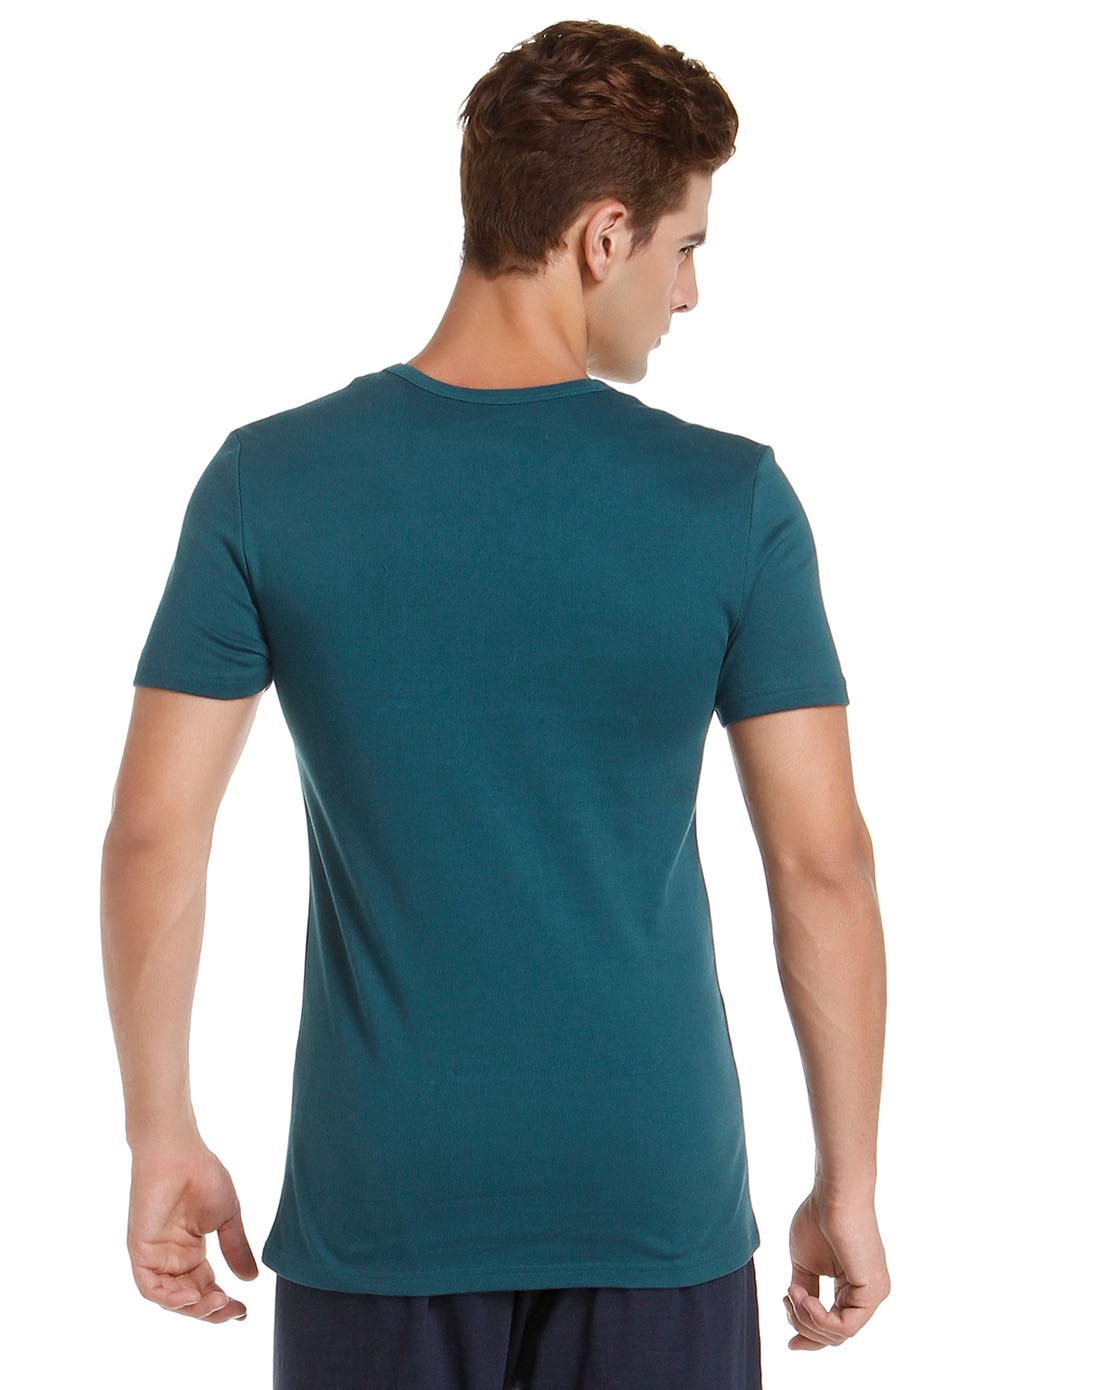 body wild 舒适v领蓝绿色短袖t恤